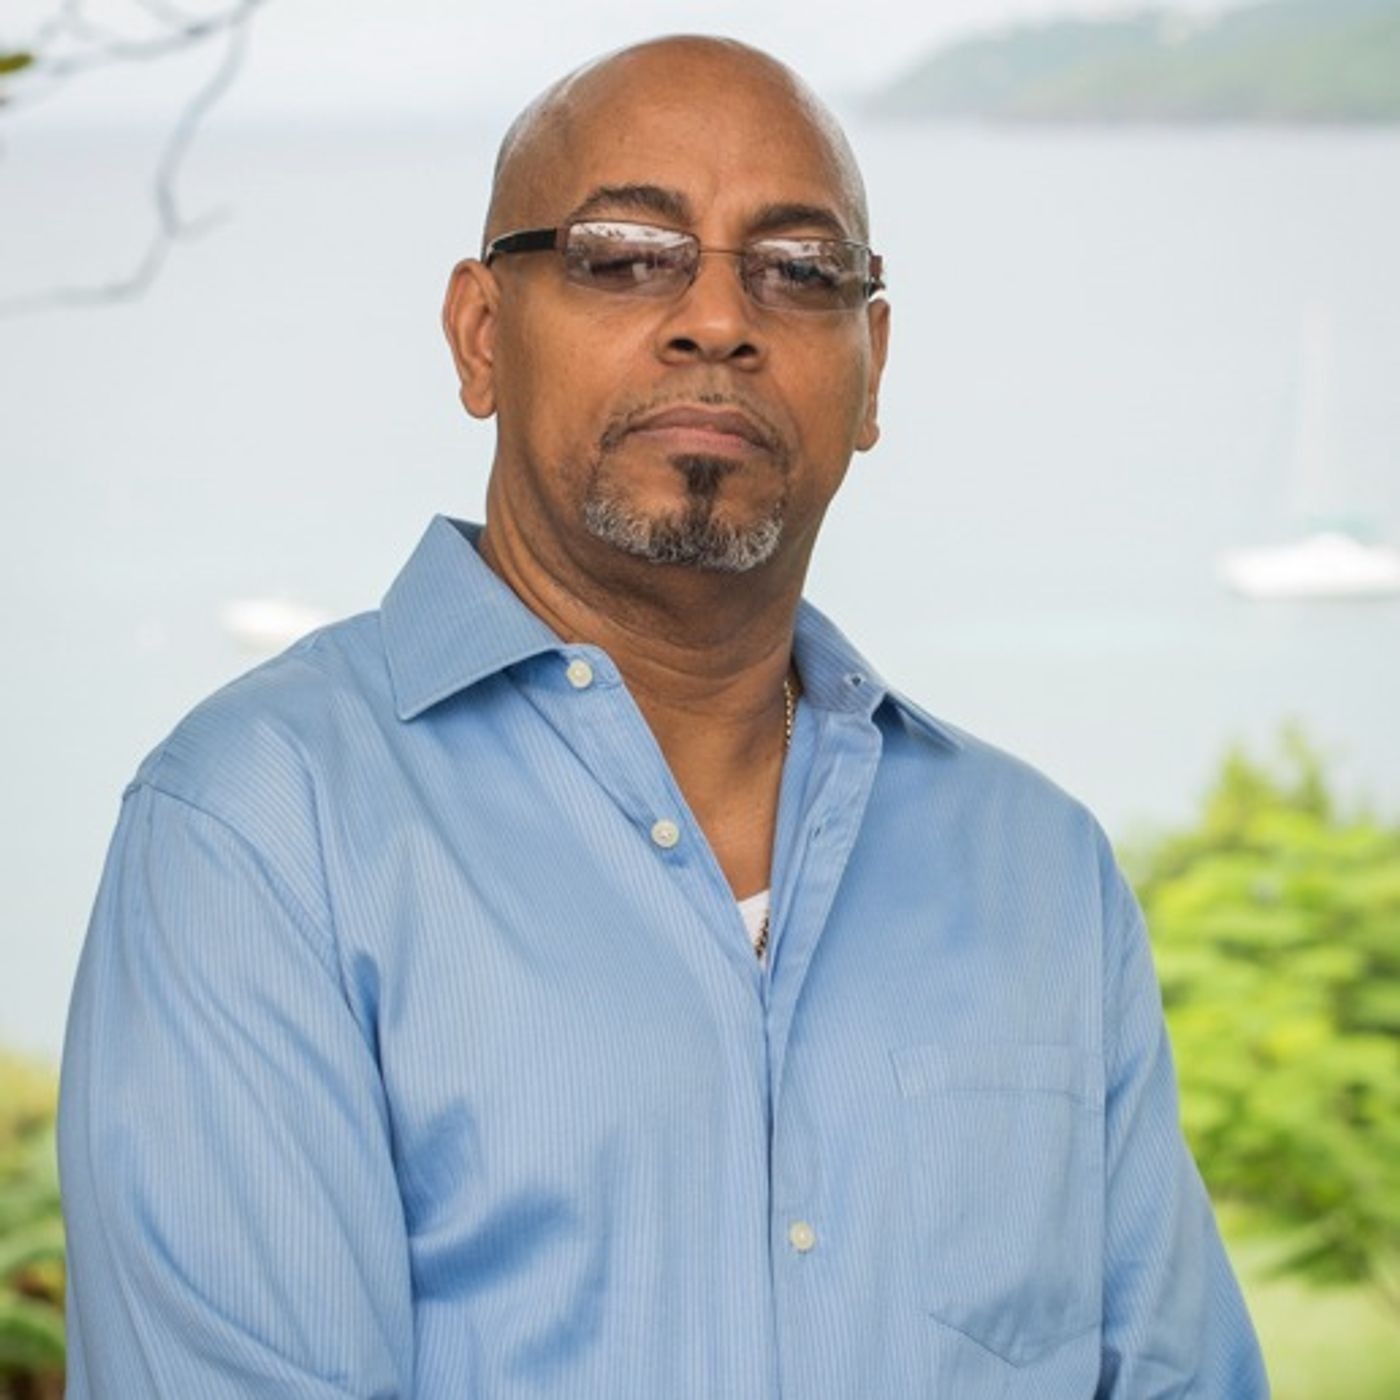 Season 2 Finale The Journey Towards Self-Determination: US Virgin Islands' Perspective